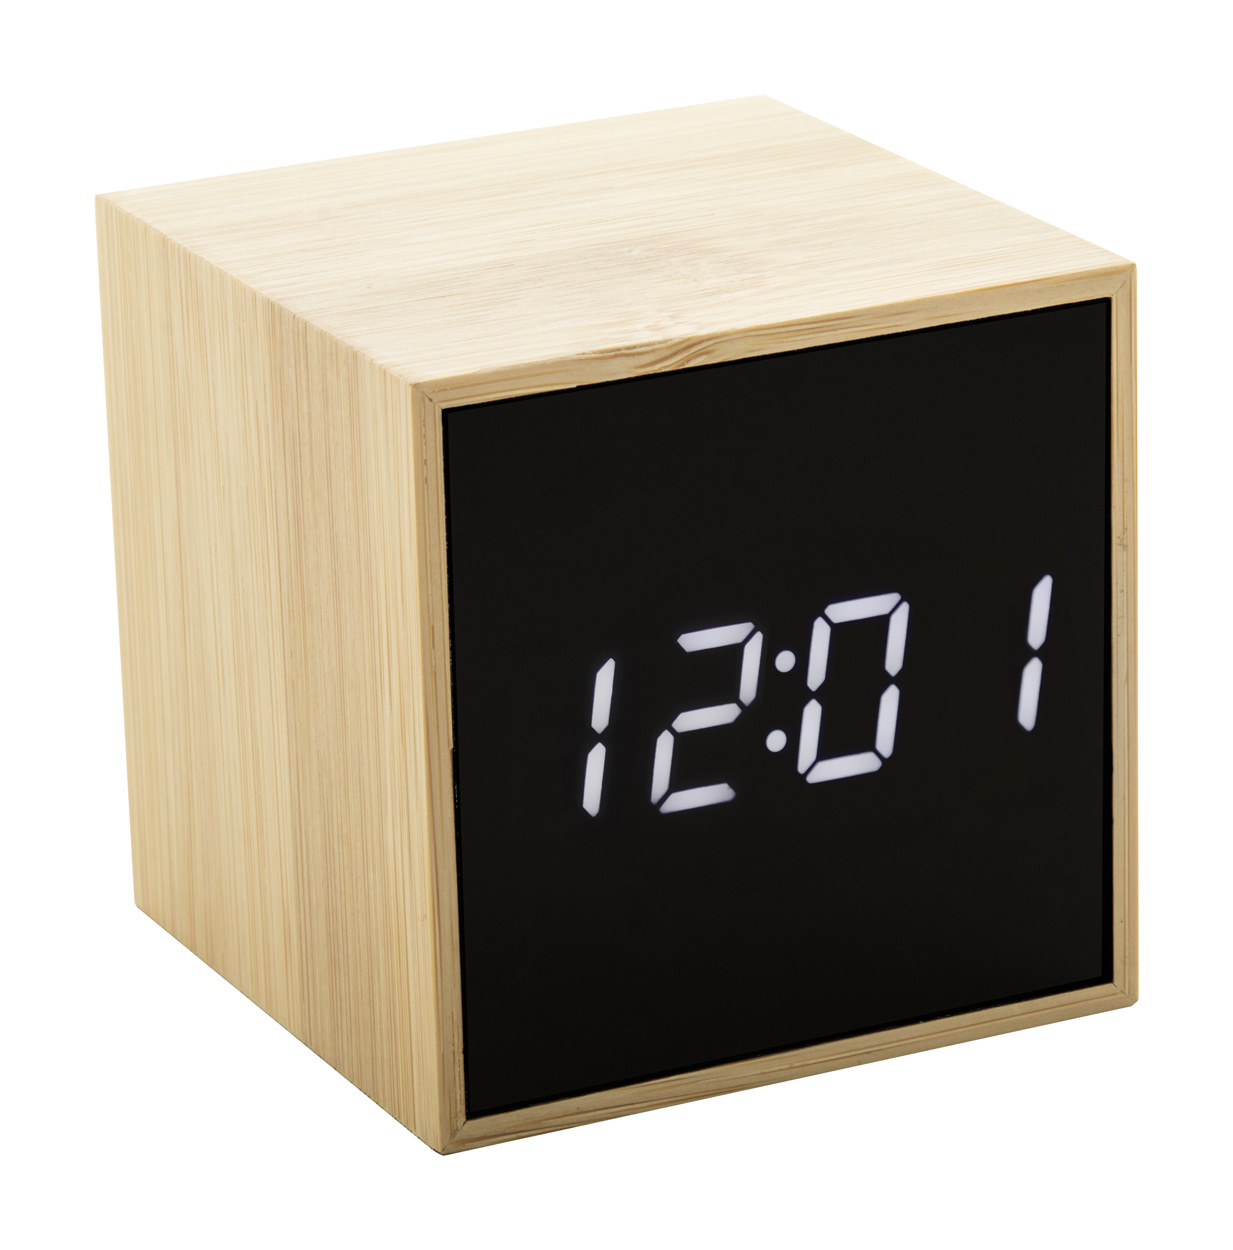 Boolarm bamboo alarm clock - beige